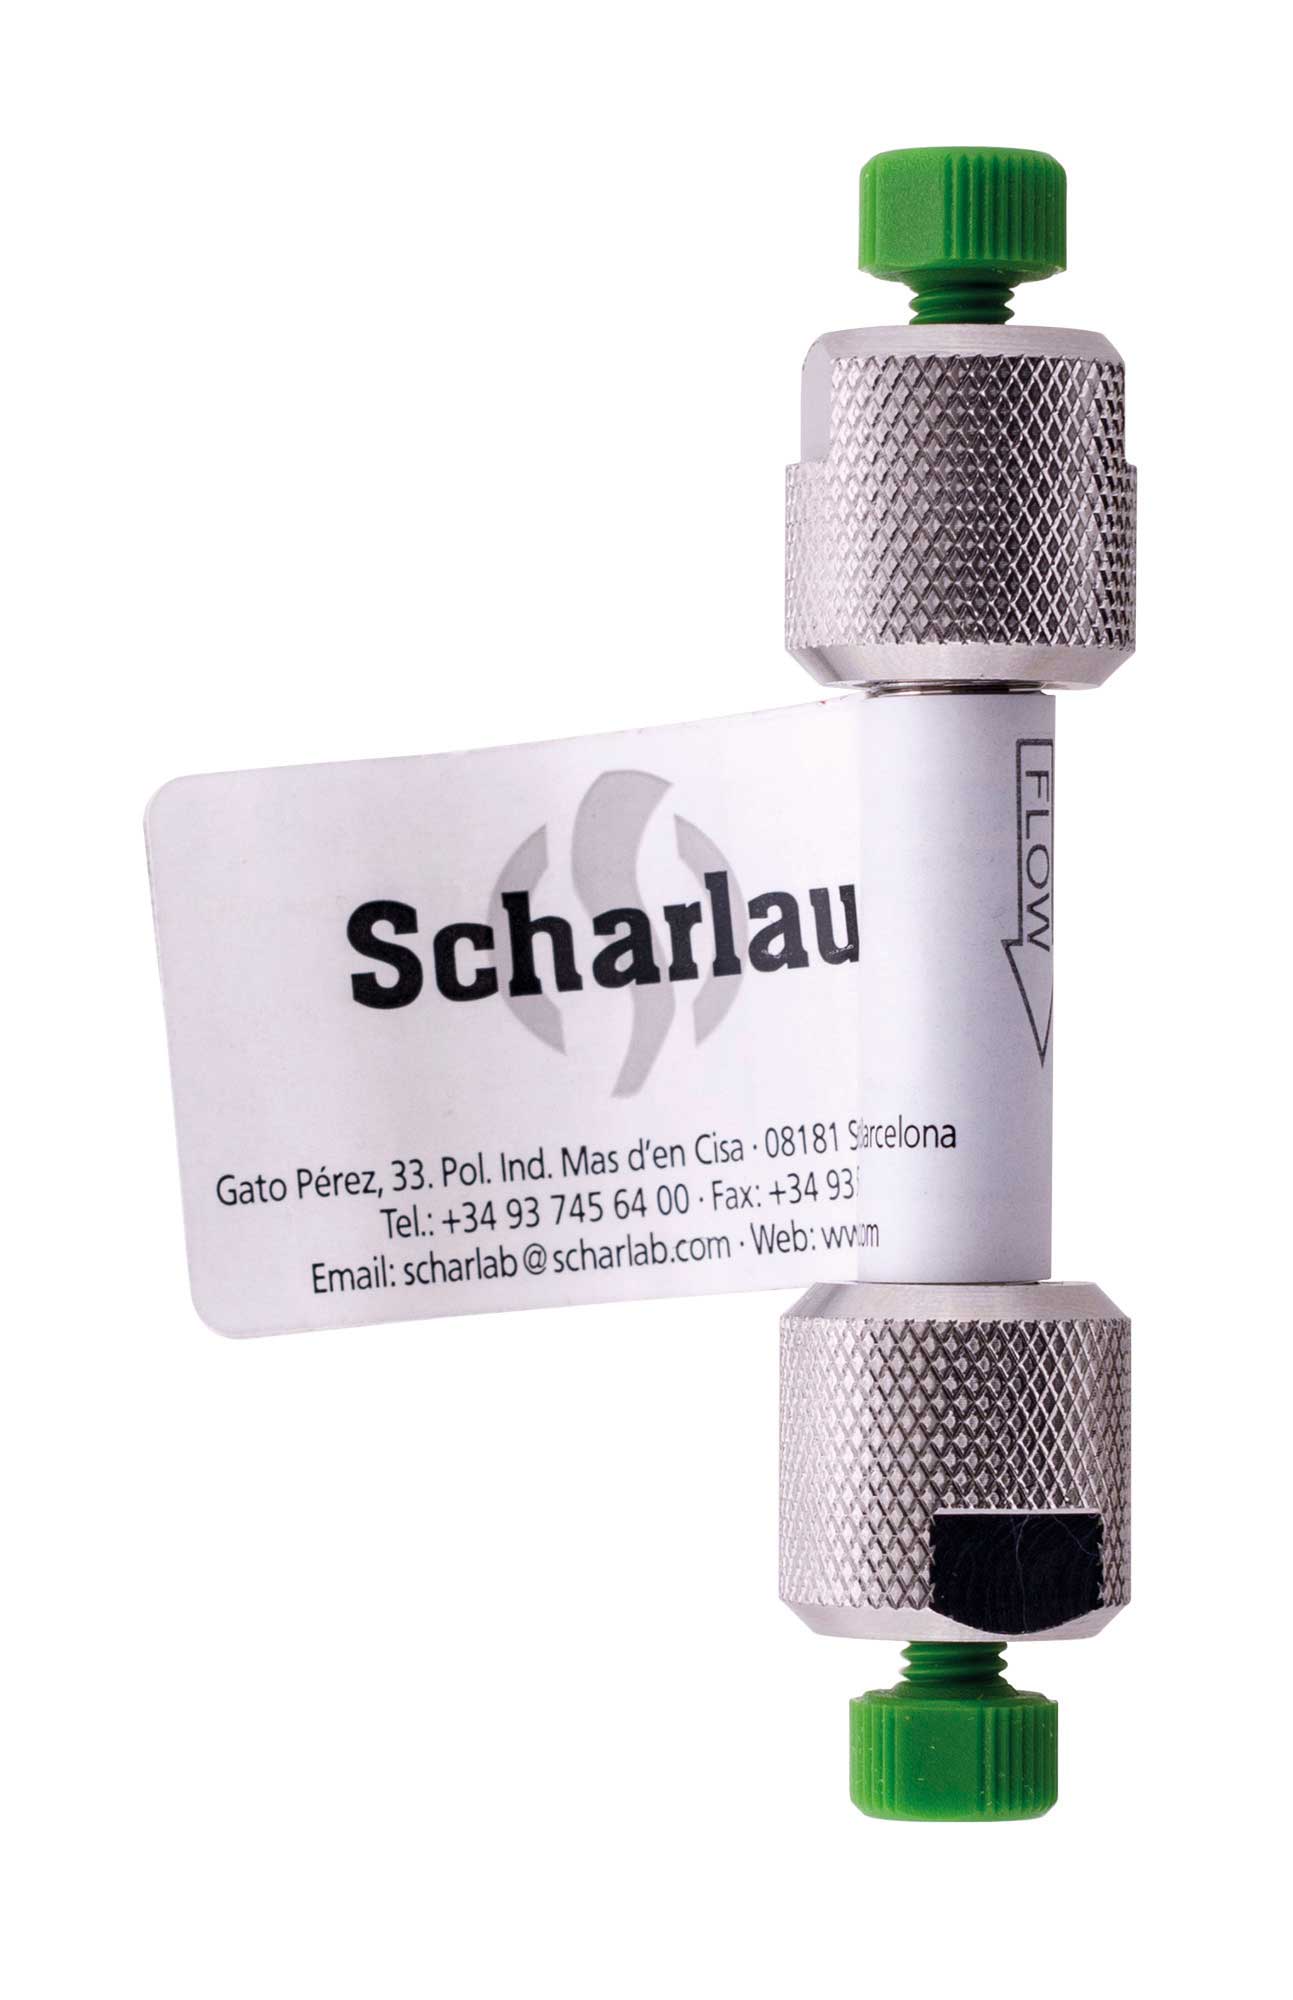 Precolumna para HPLC Scharlau KromaPhase 100Å C18 3 µm 30x2mm